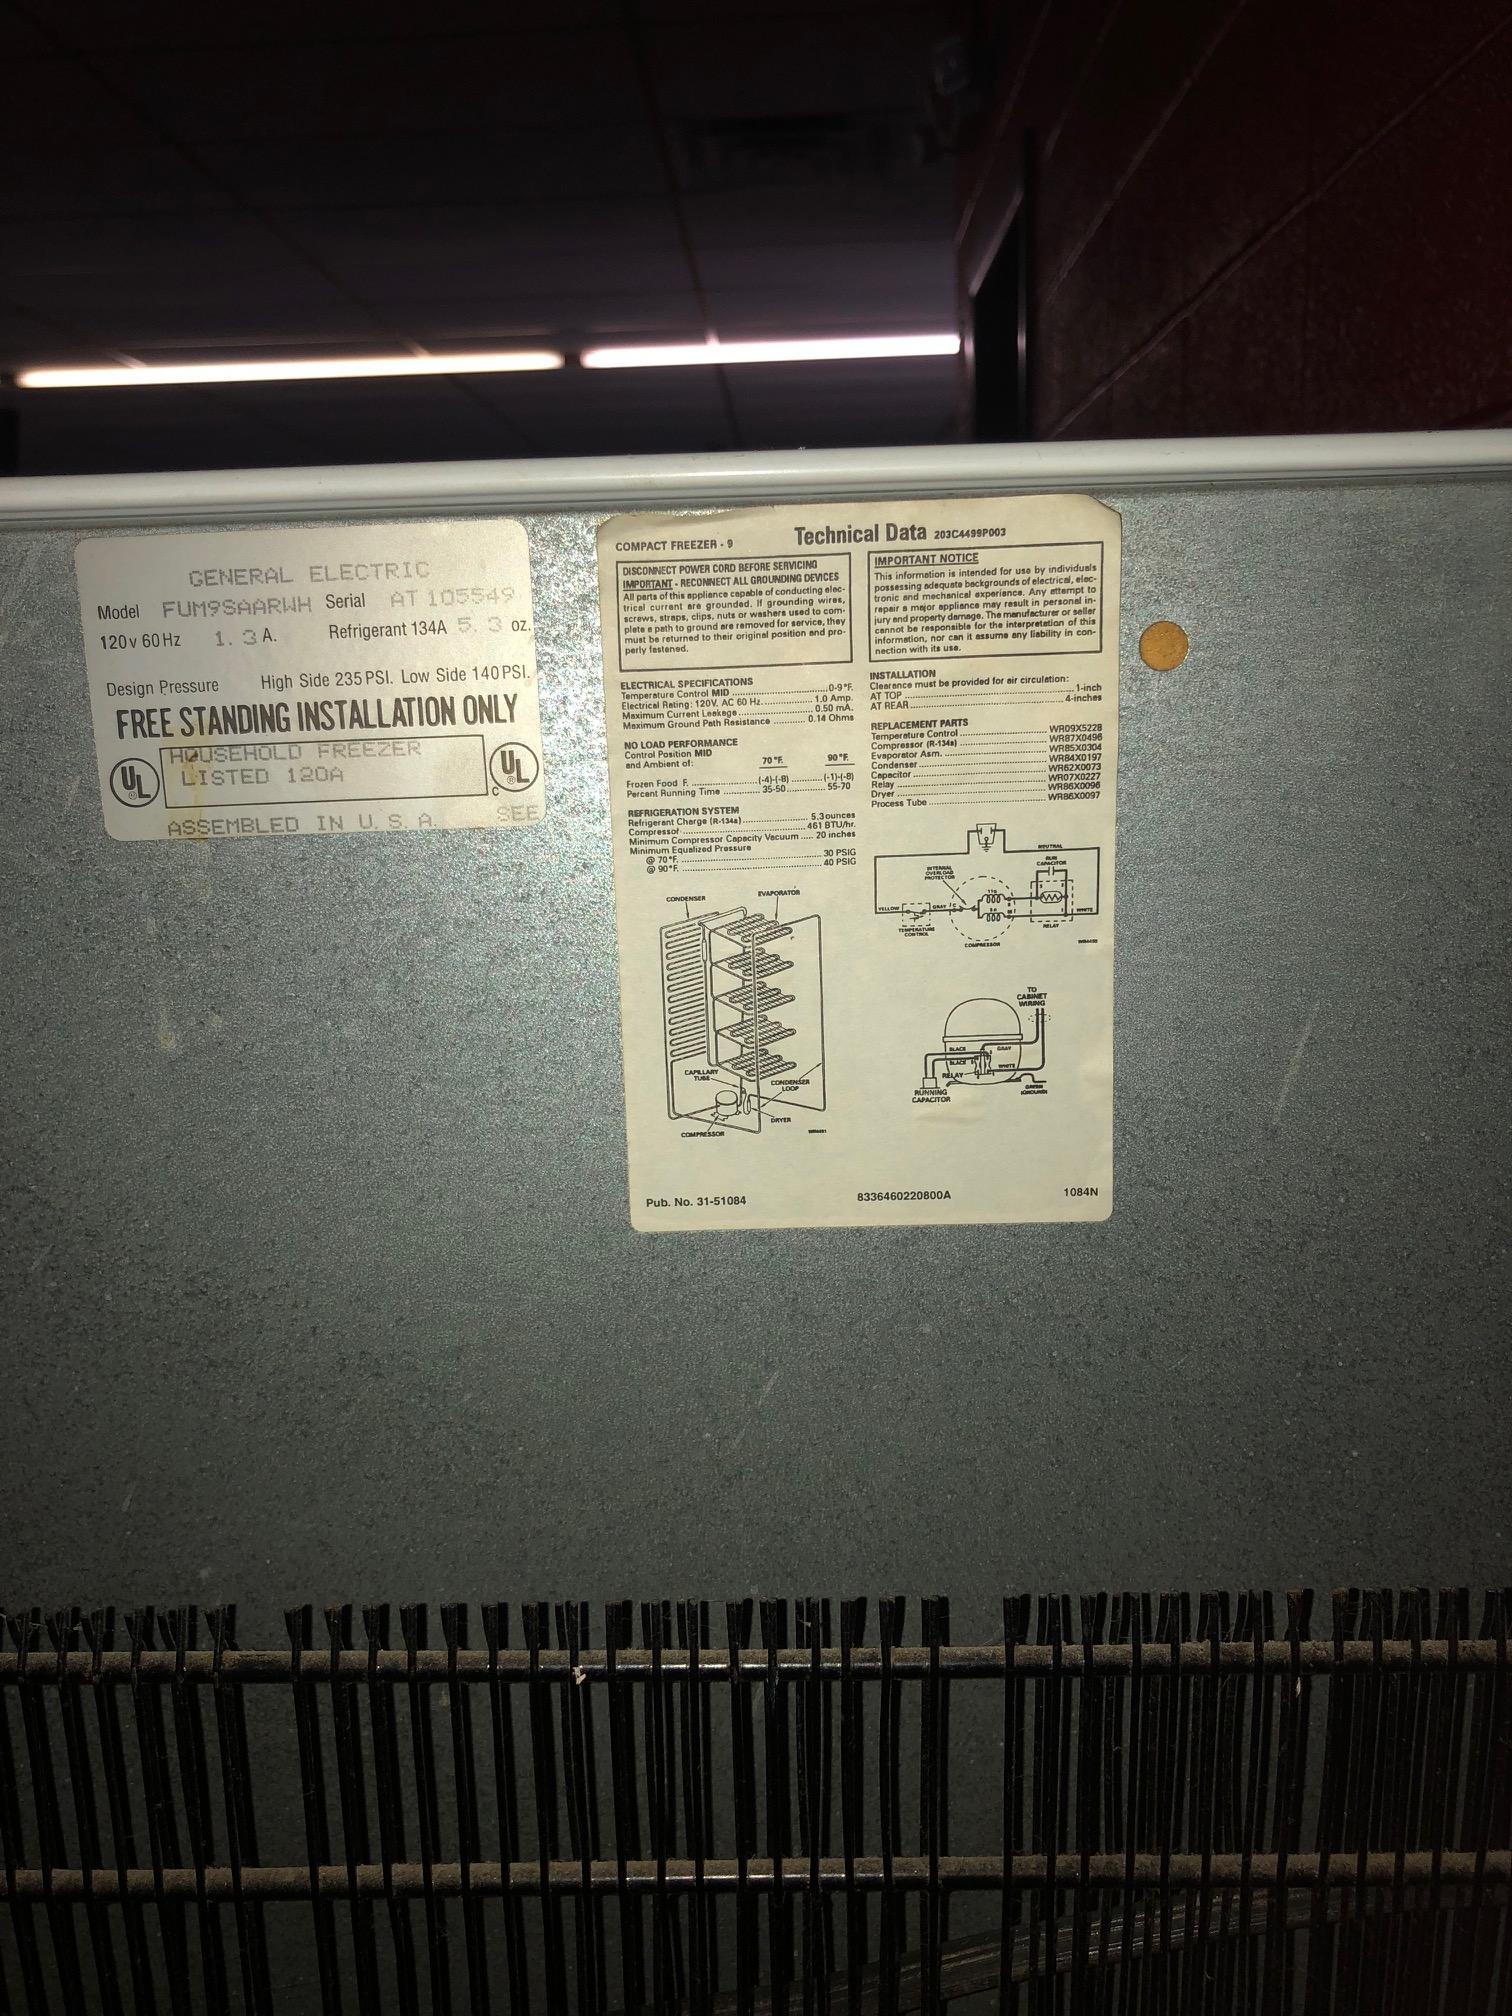 GE 1/2 size upright freezer, 4.5' tall